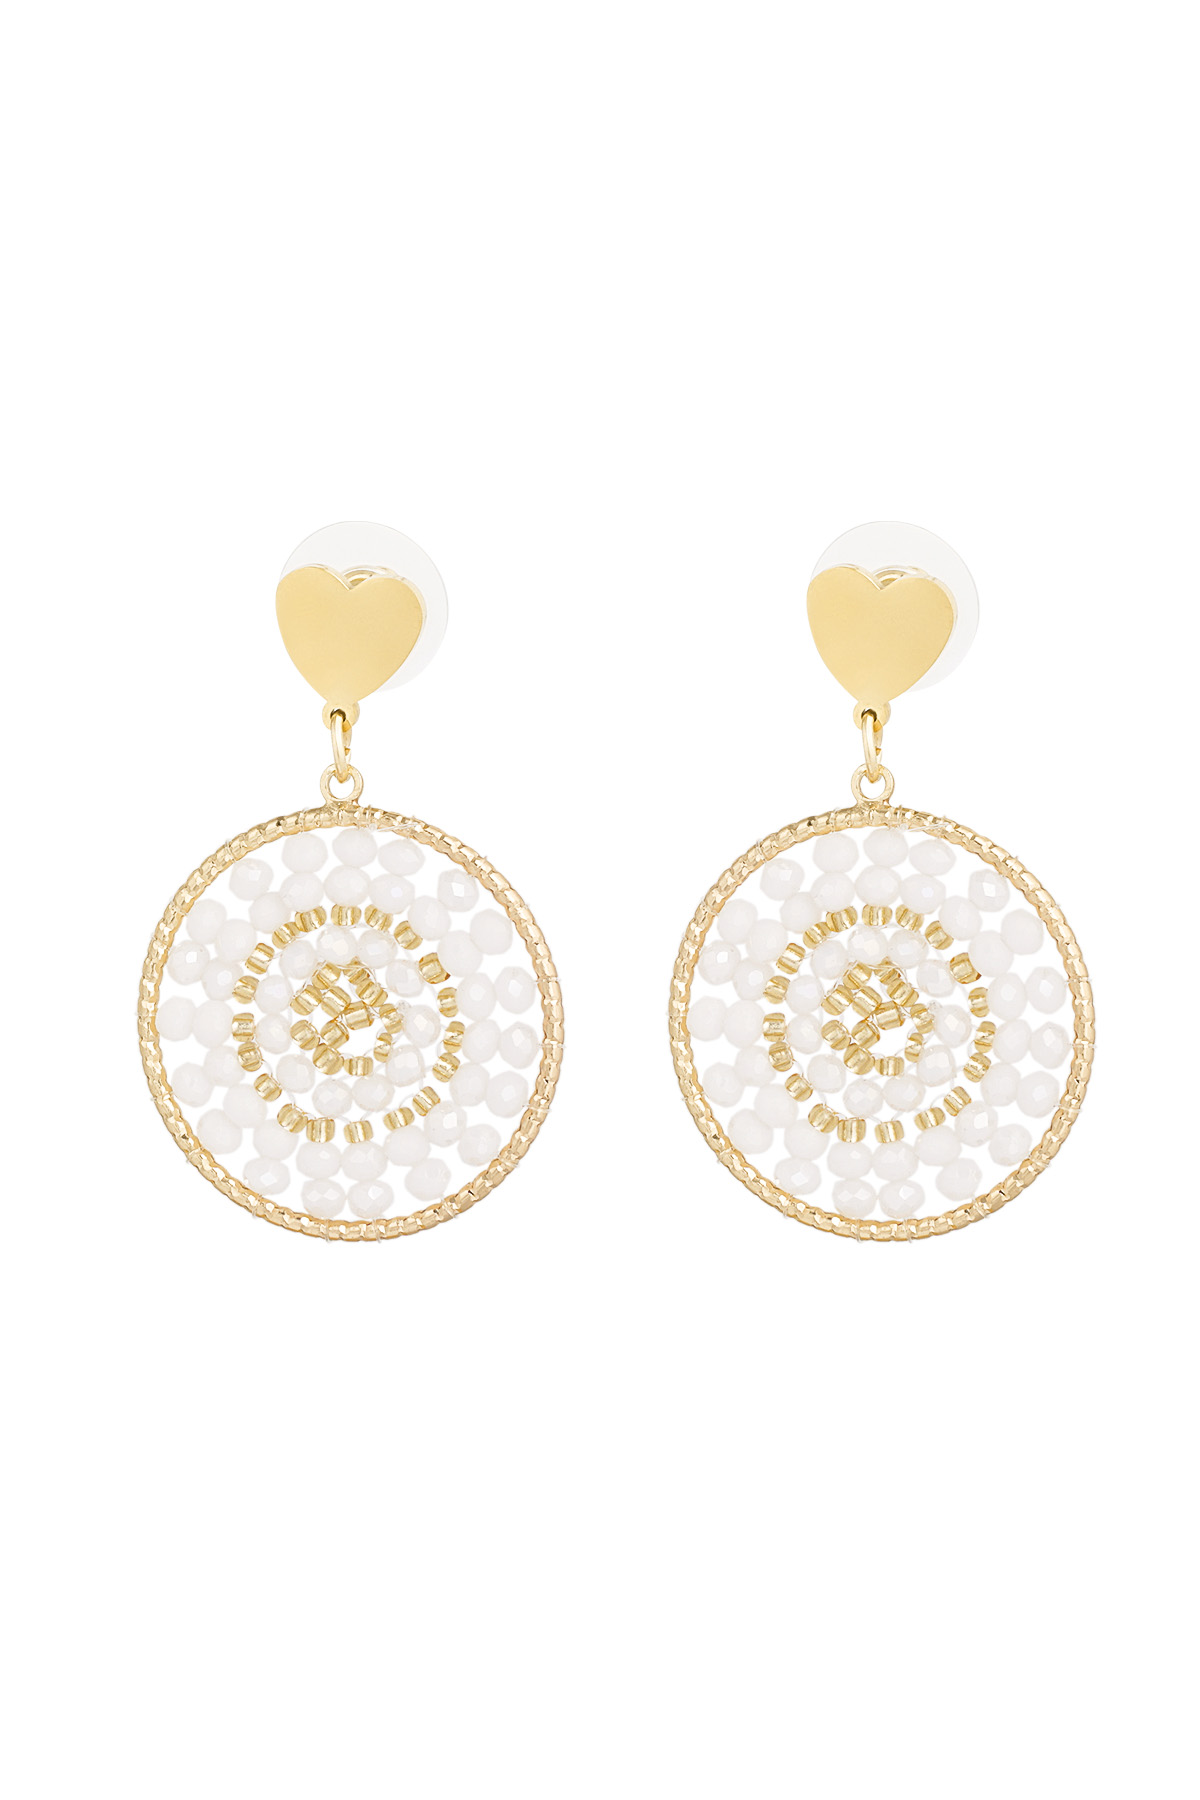 Mandala earrings with heart - white gold 